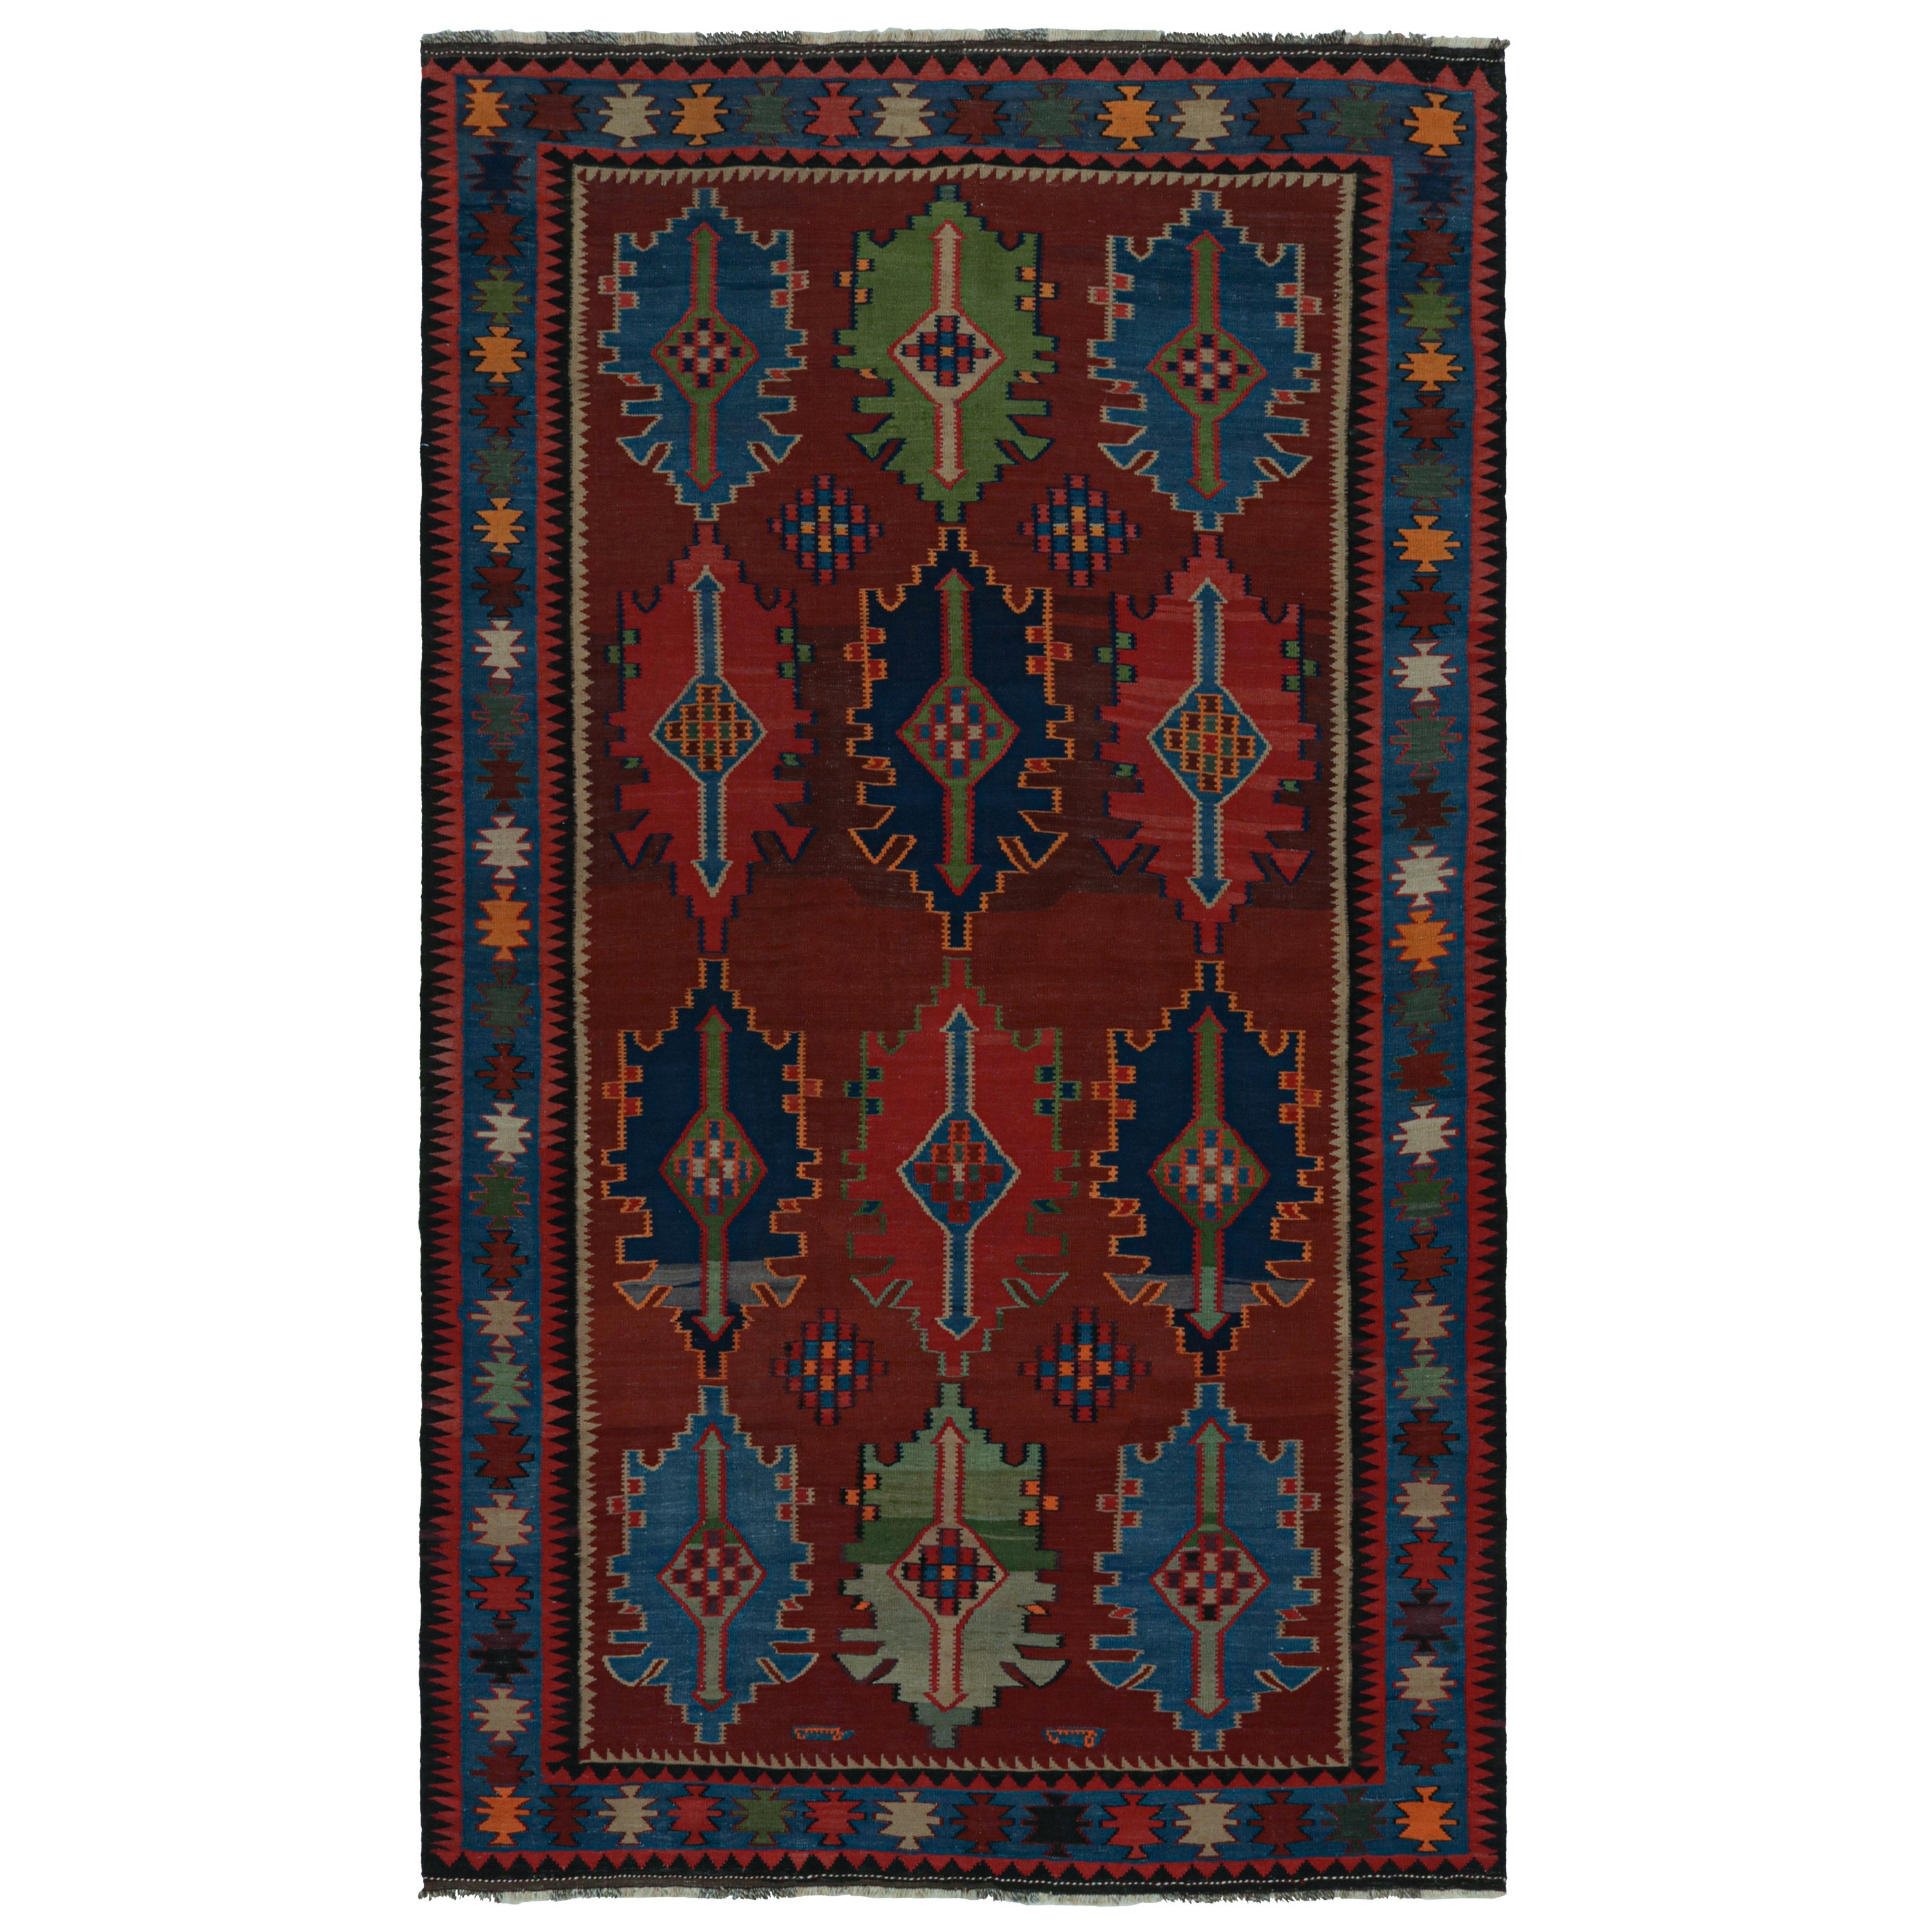  Vintage Afghan Tribal Kilim rug, with Geometric Patterns, from Rug & Kilim For Sale